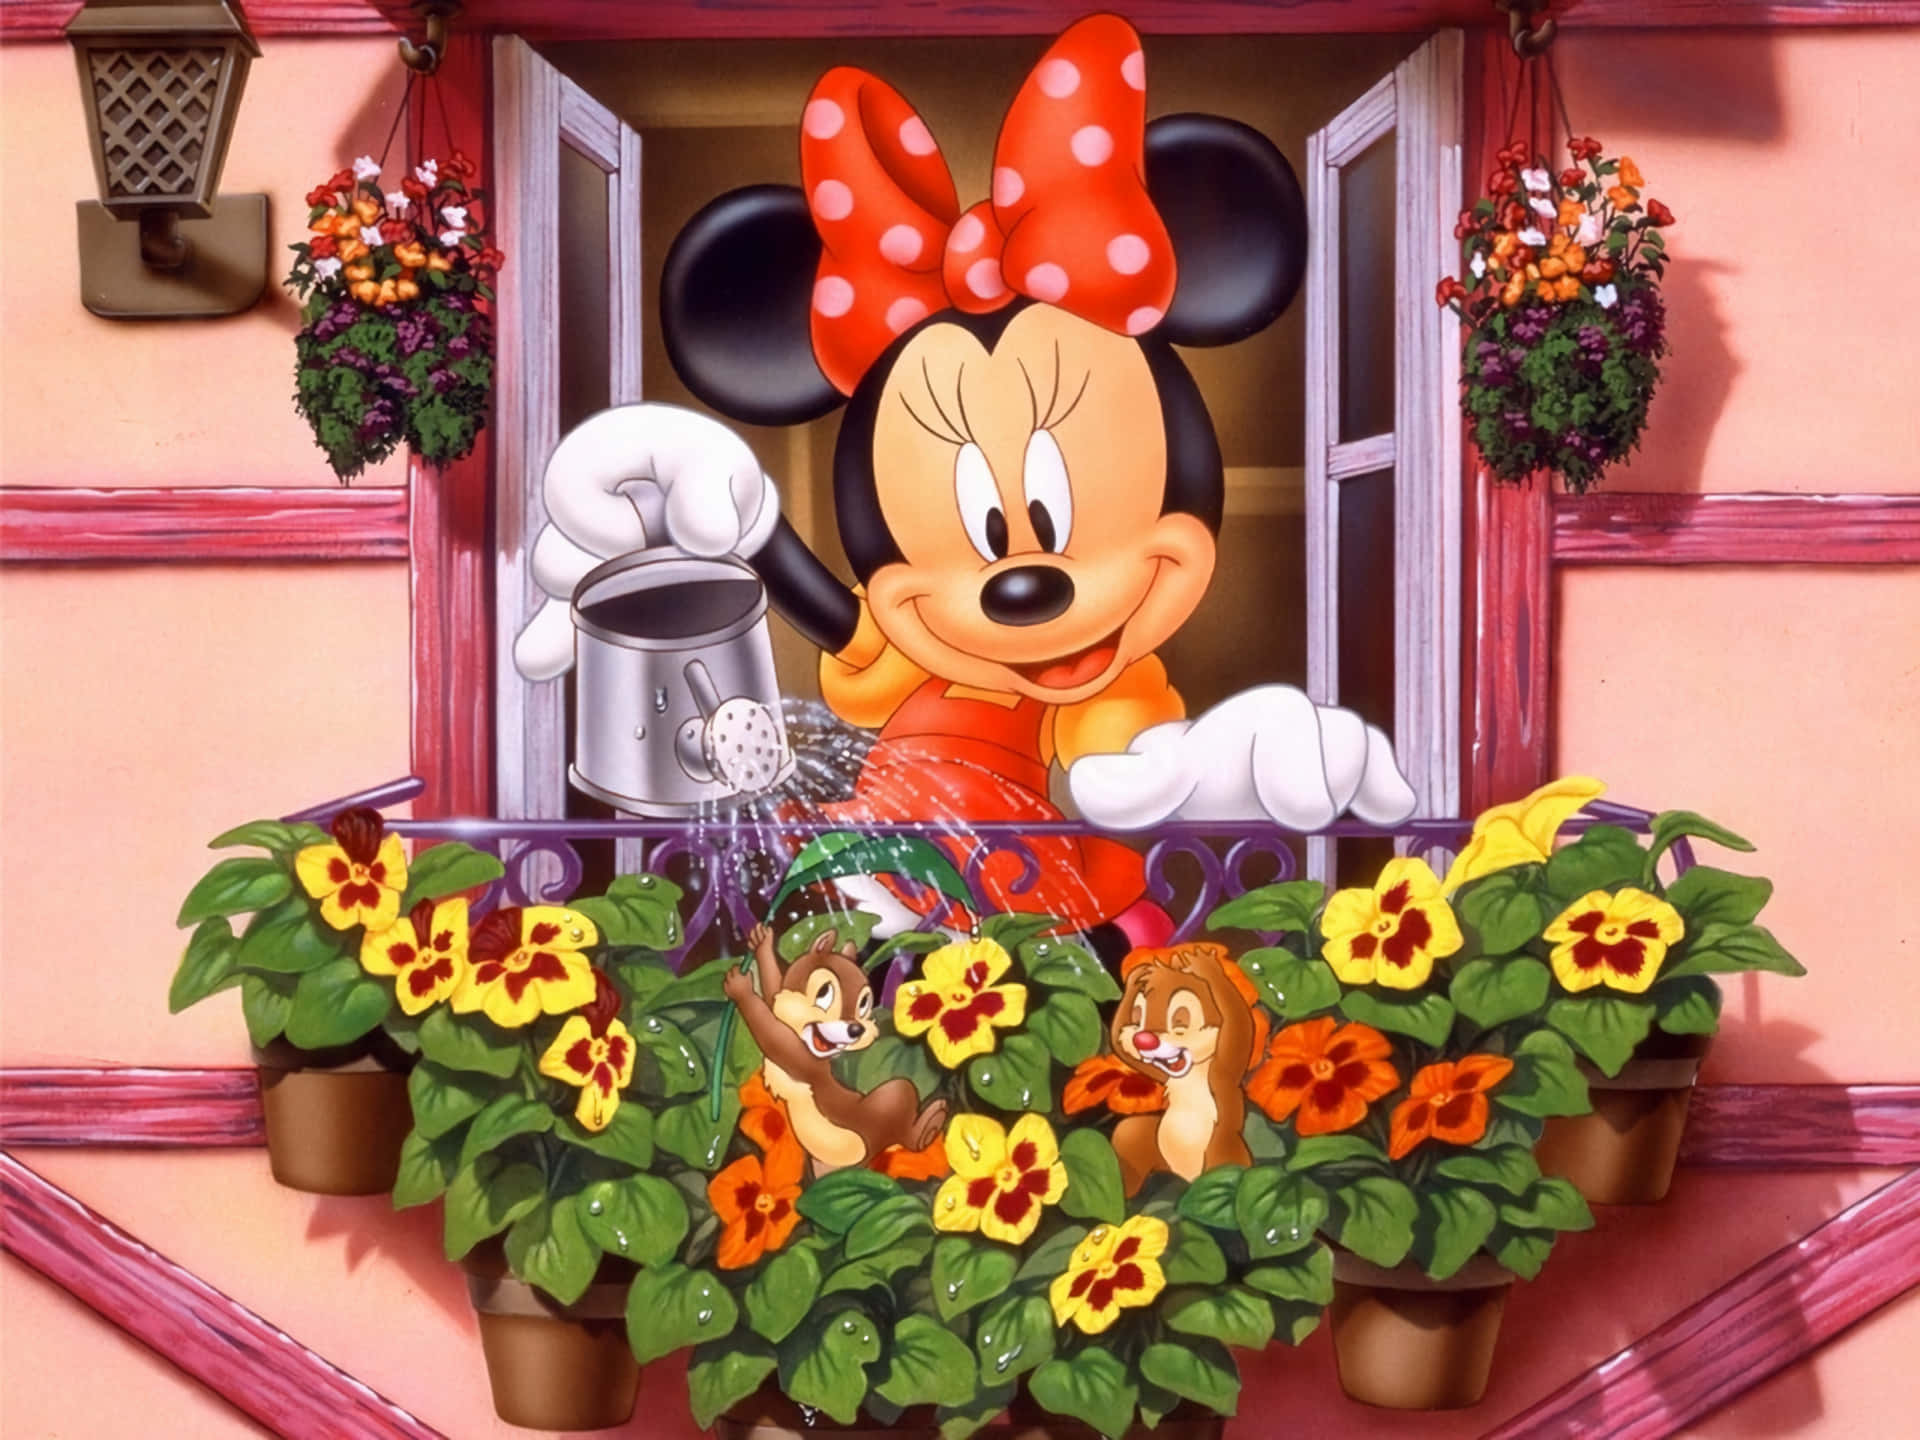 Meet Minnie Mouse - A Symbol of Fun&Friendship!